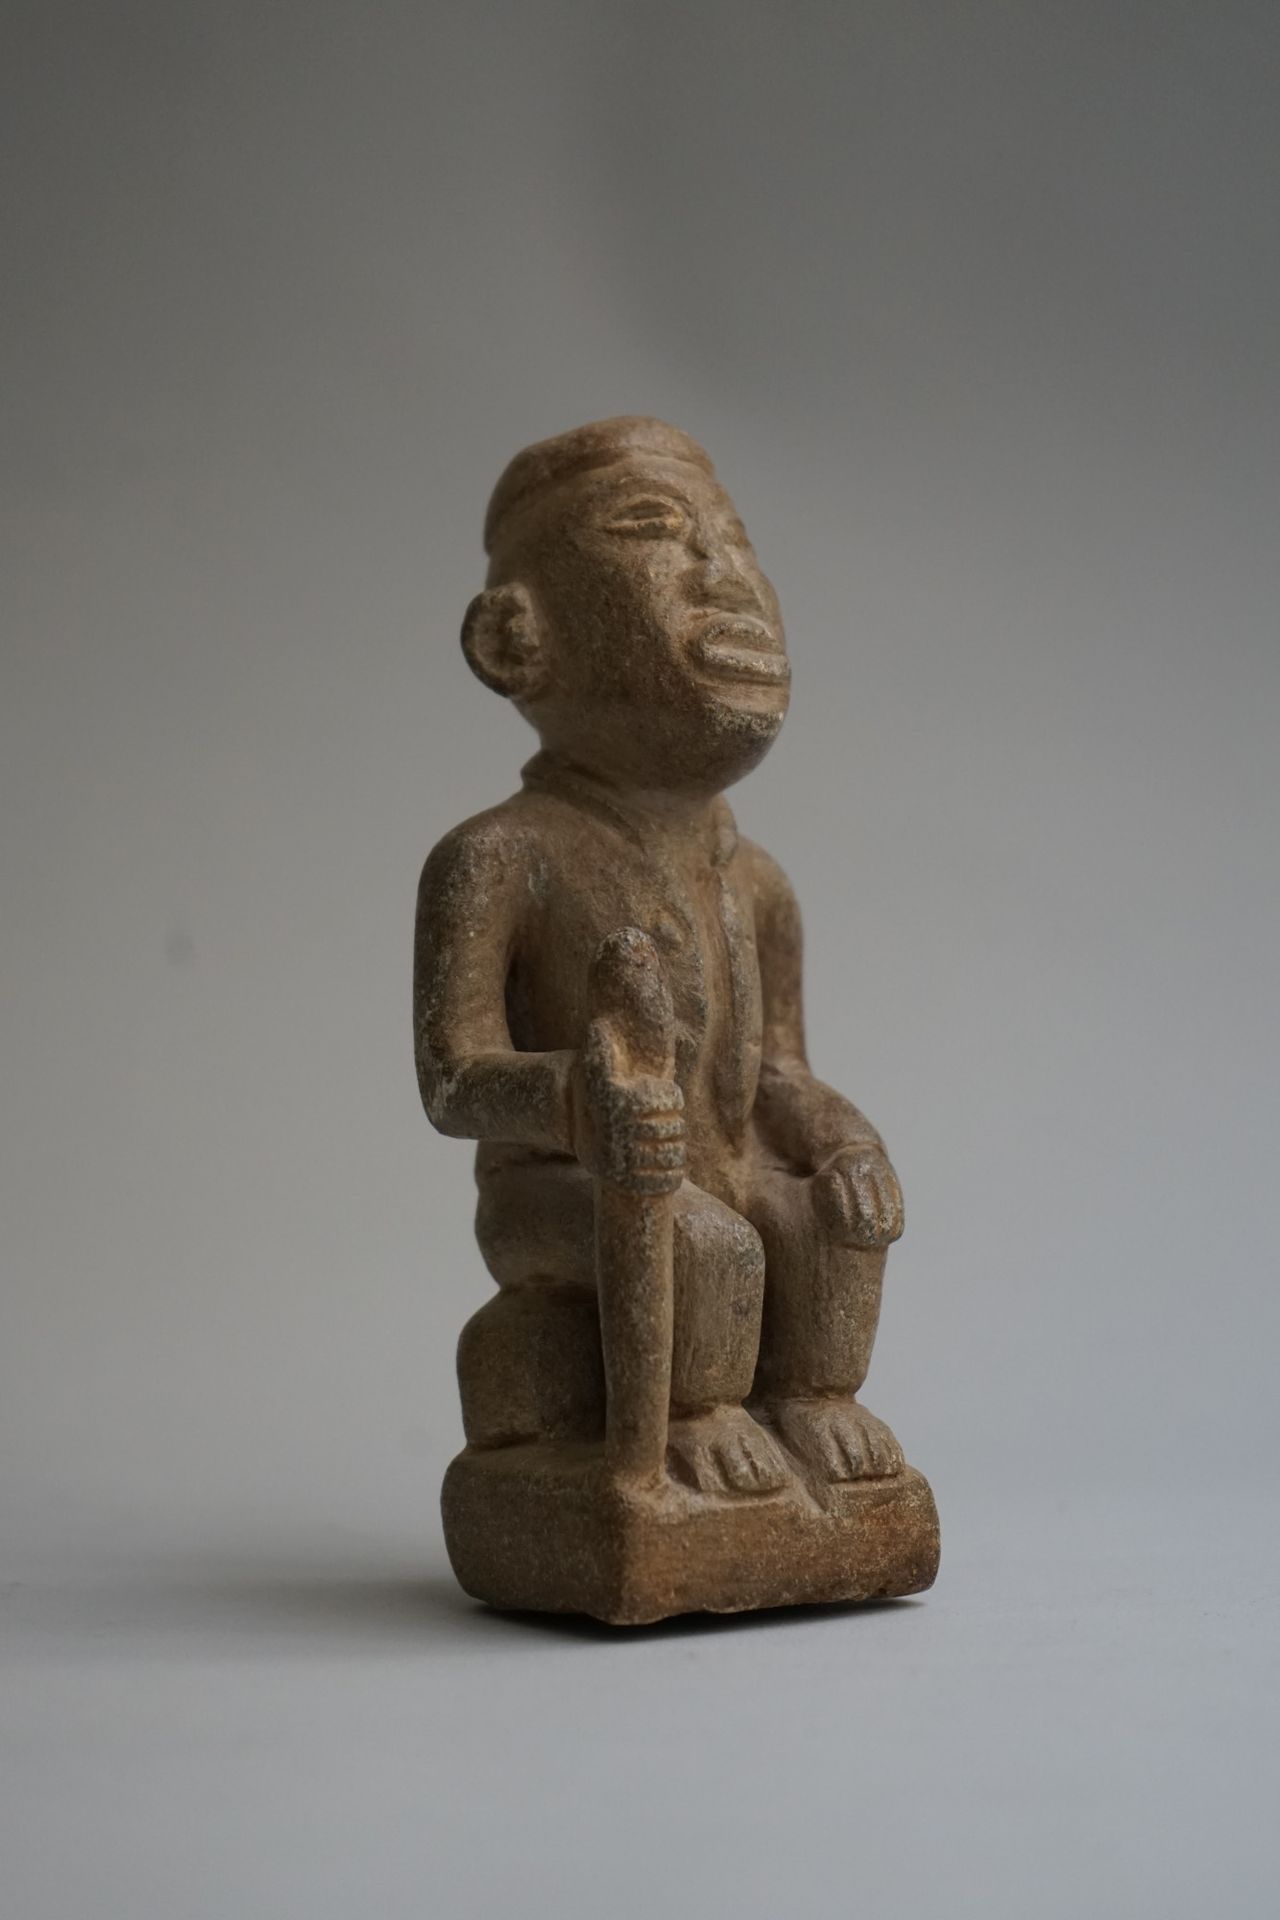 Null 图中显示一个坐着的酋长拿着一根棍子。石灰石。

刚果民主共和国。

高：15.4厘米